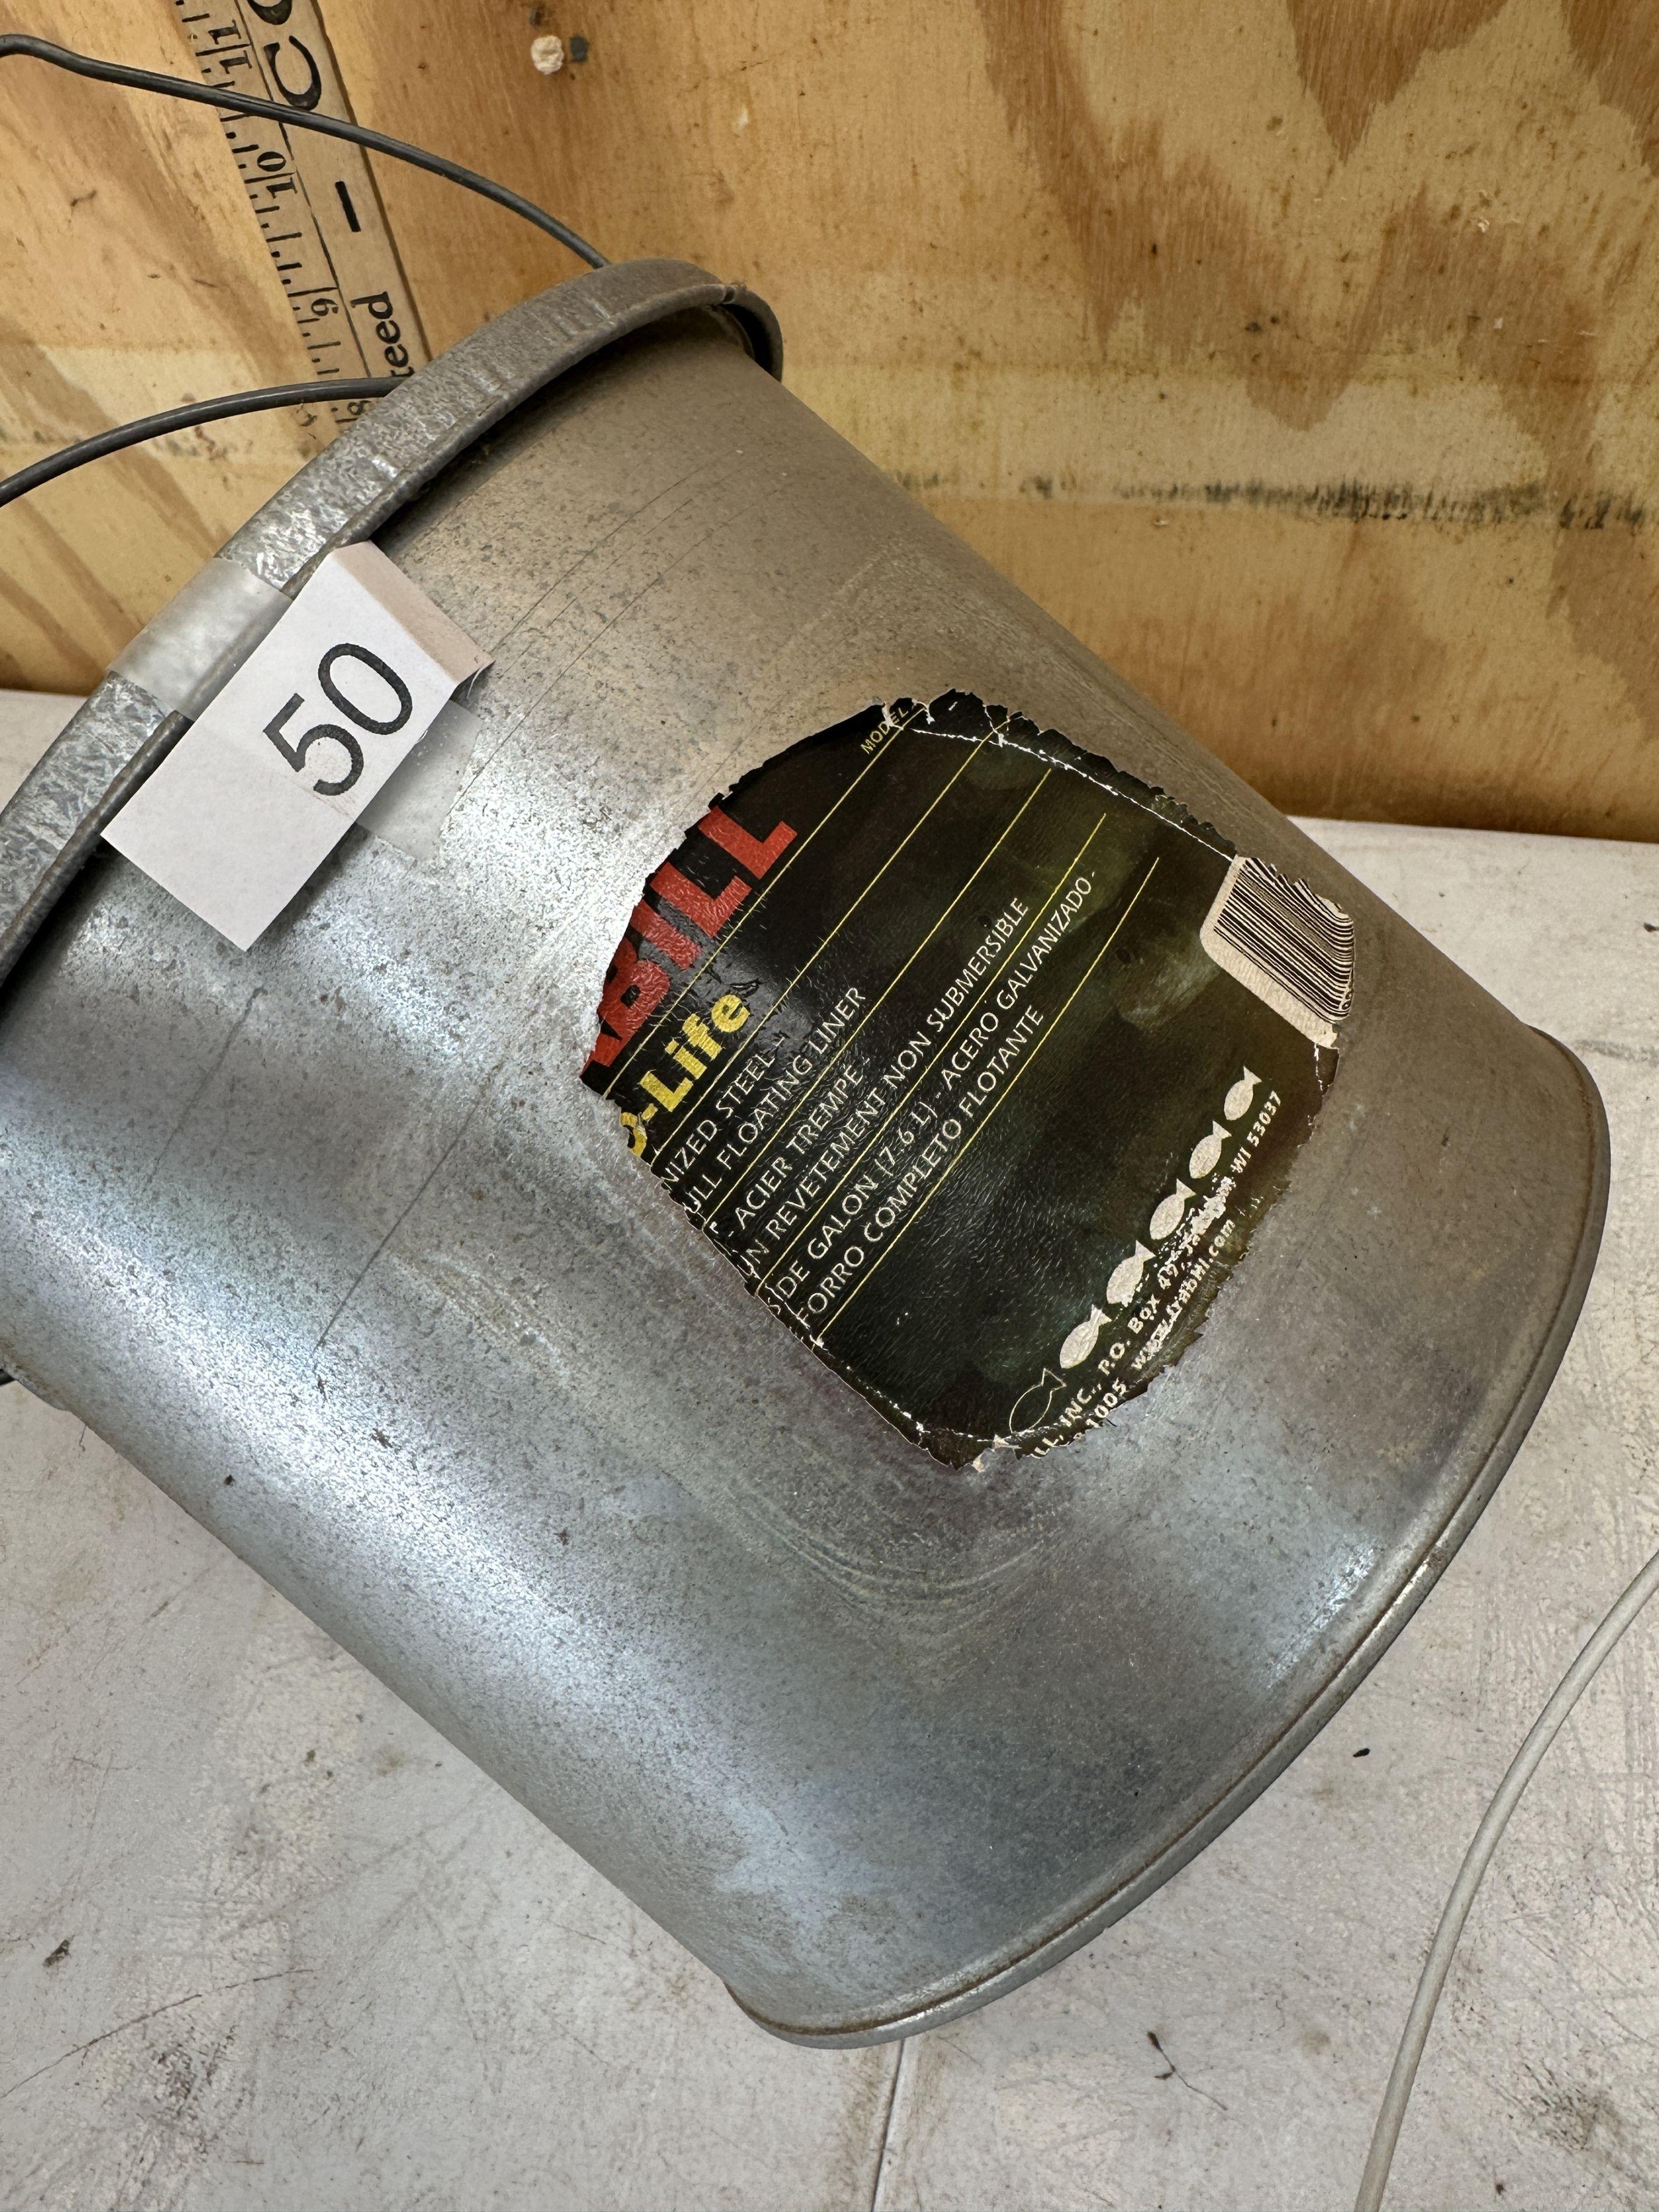 Frabill Galvanized Metal Minnow Bucket